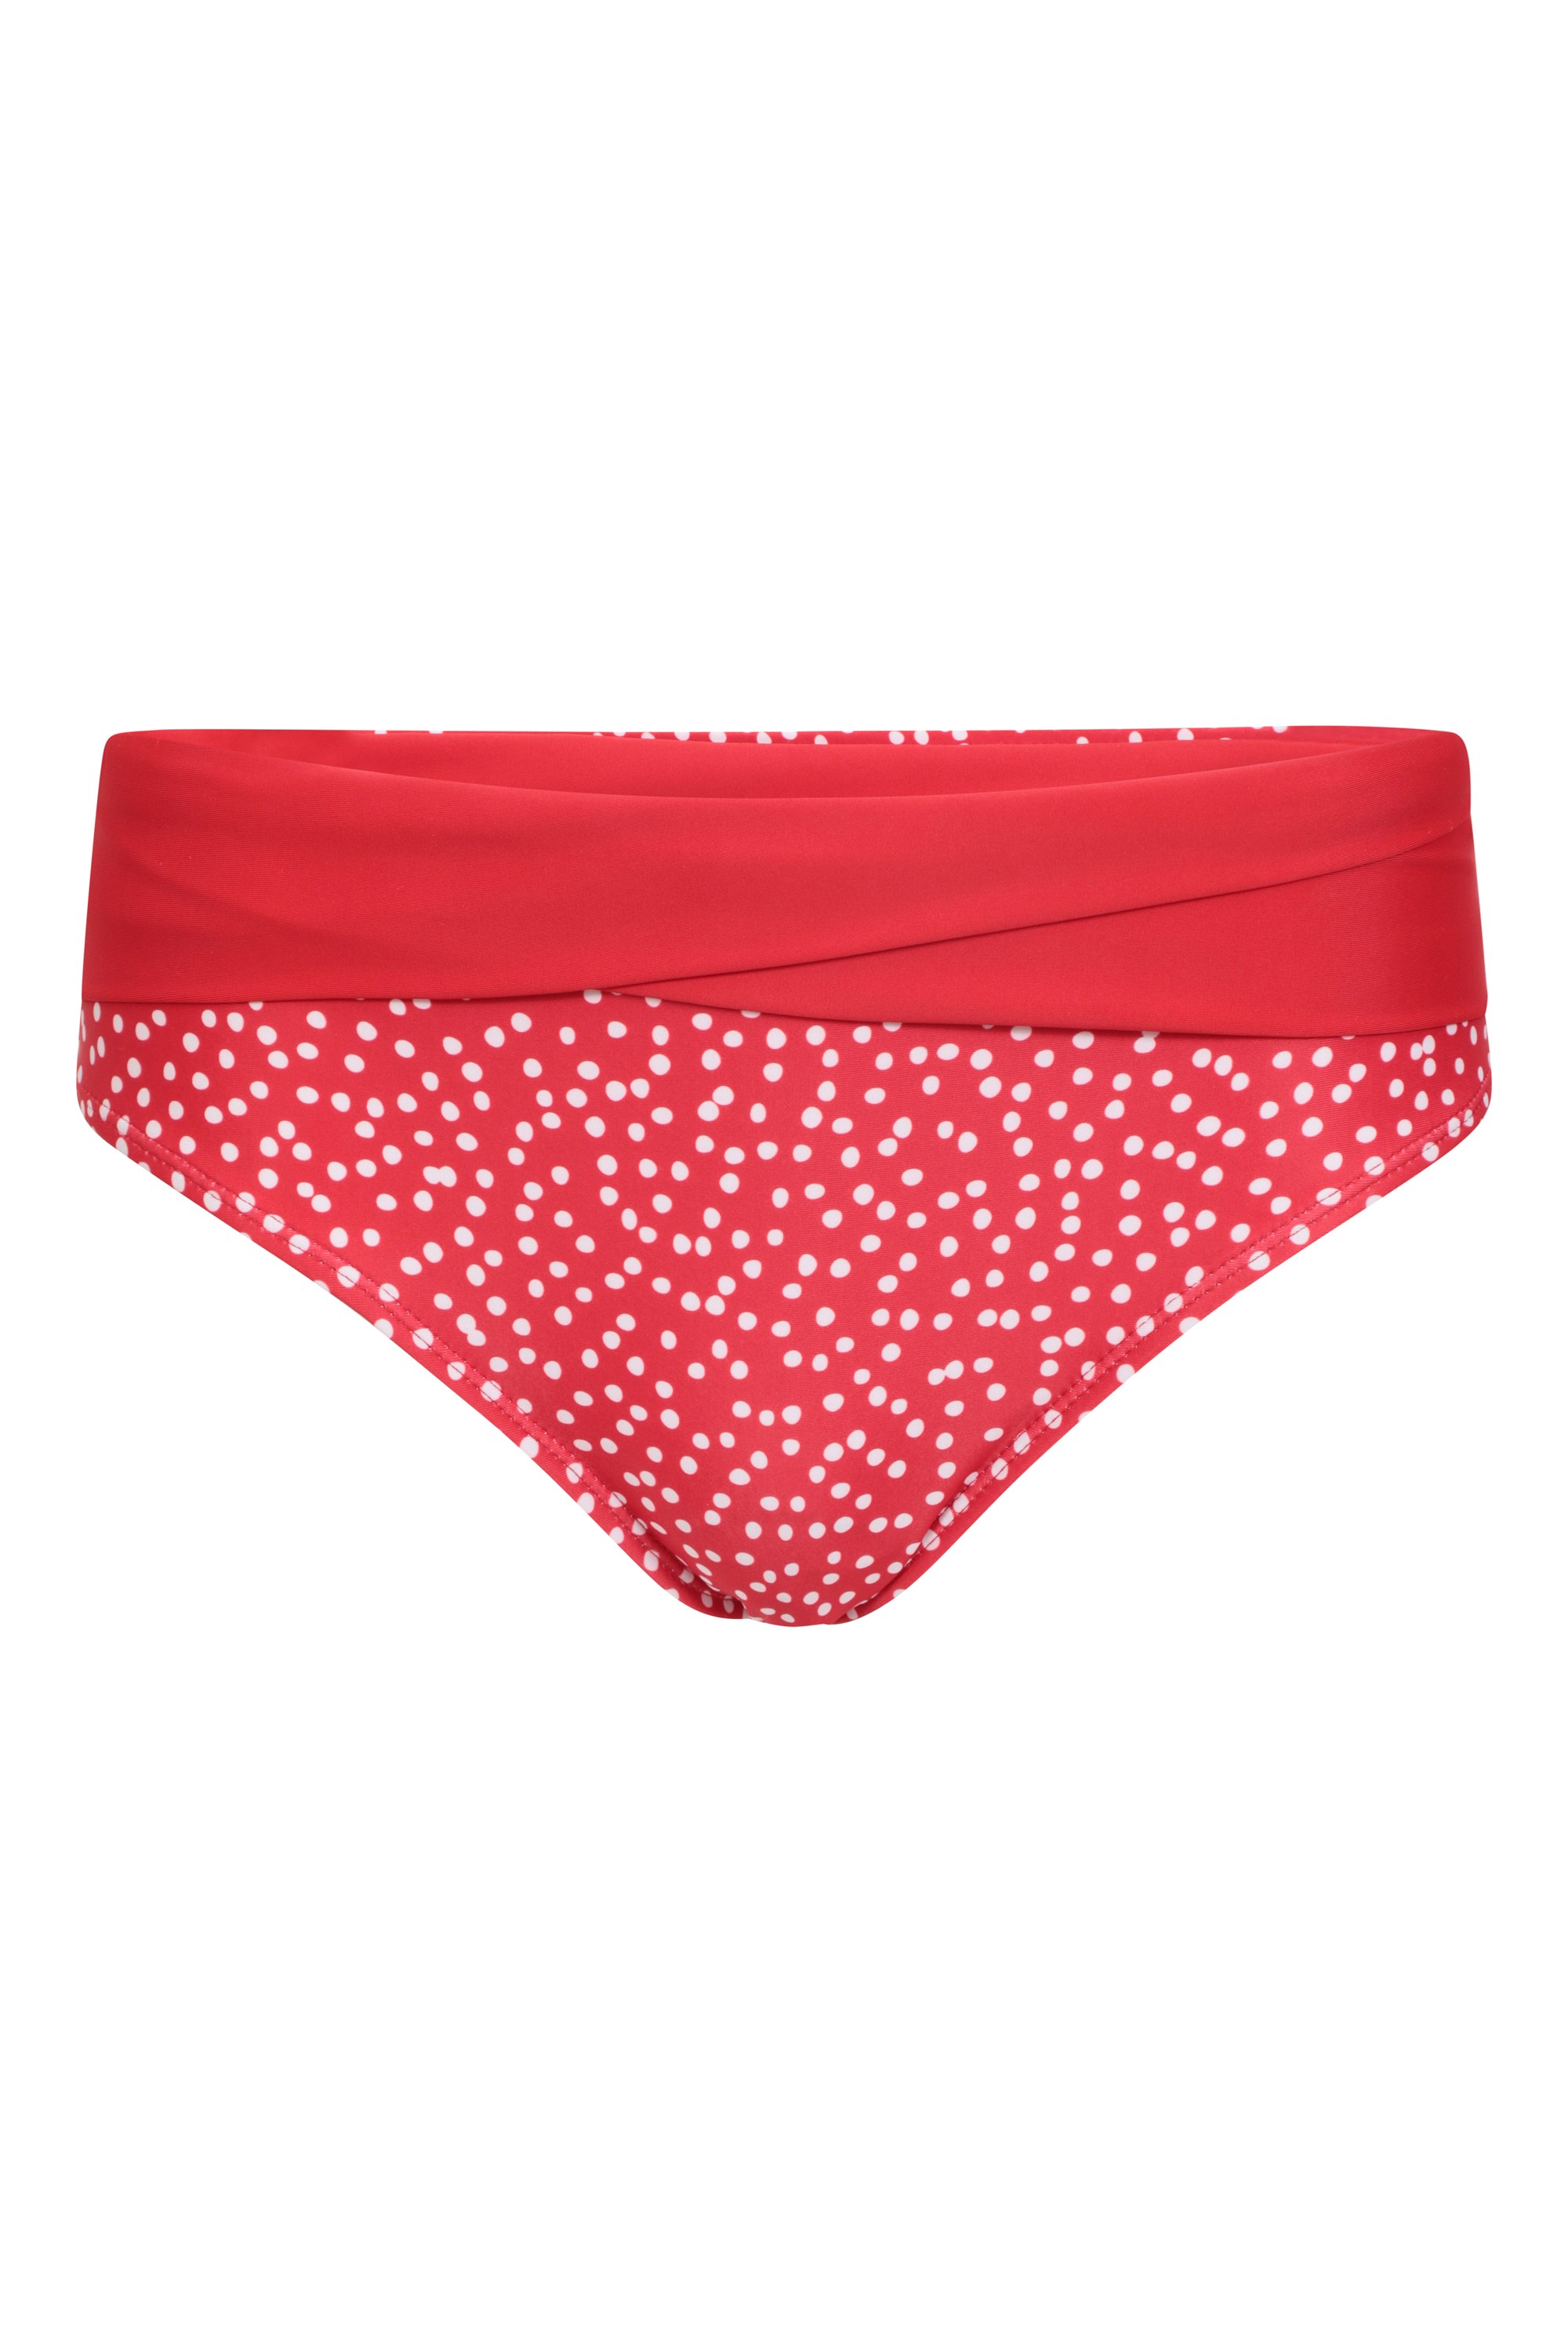 Maldives Wrap Womens Bikini Bottoms - Red